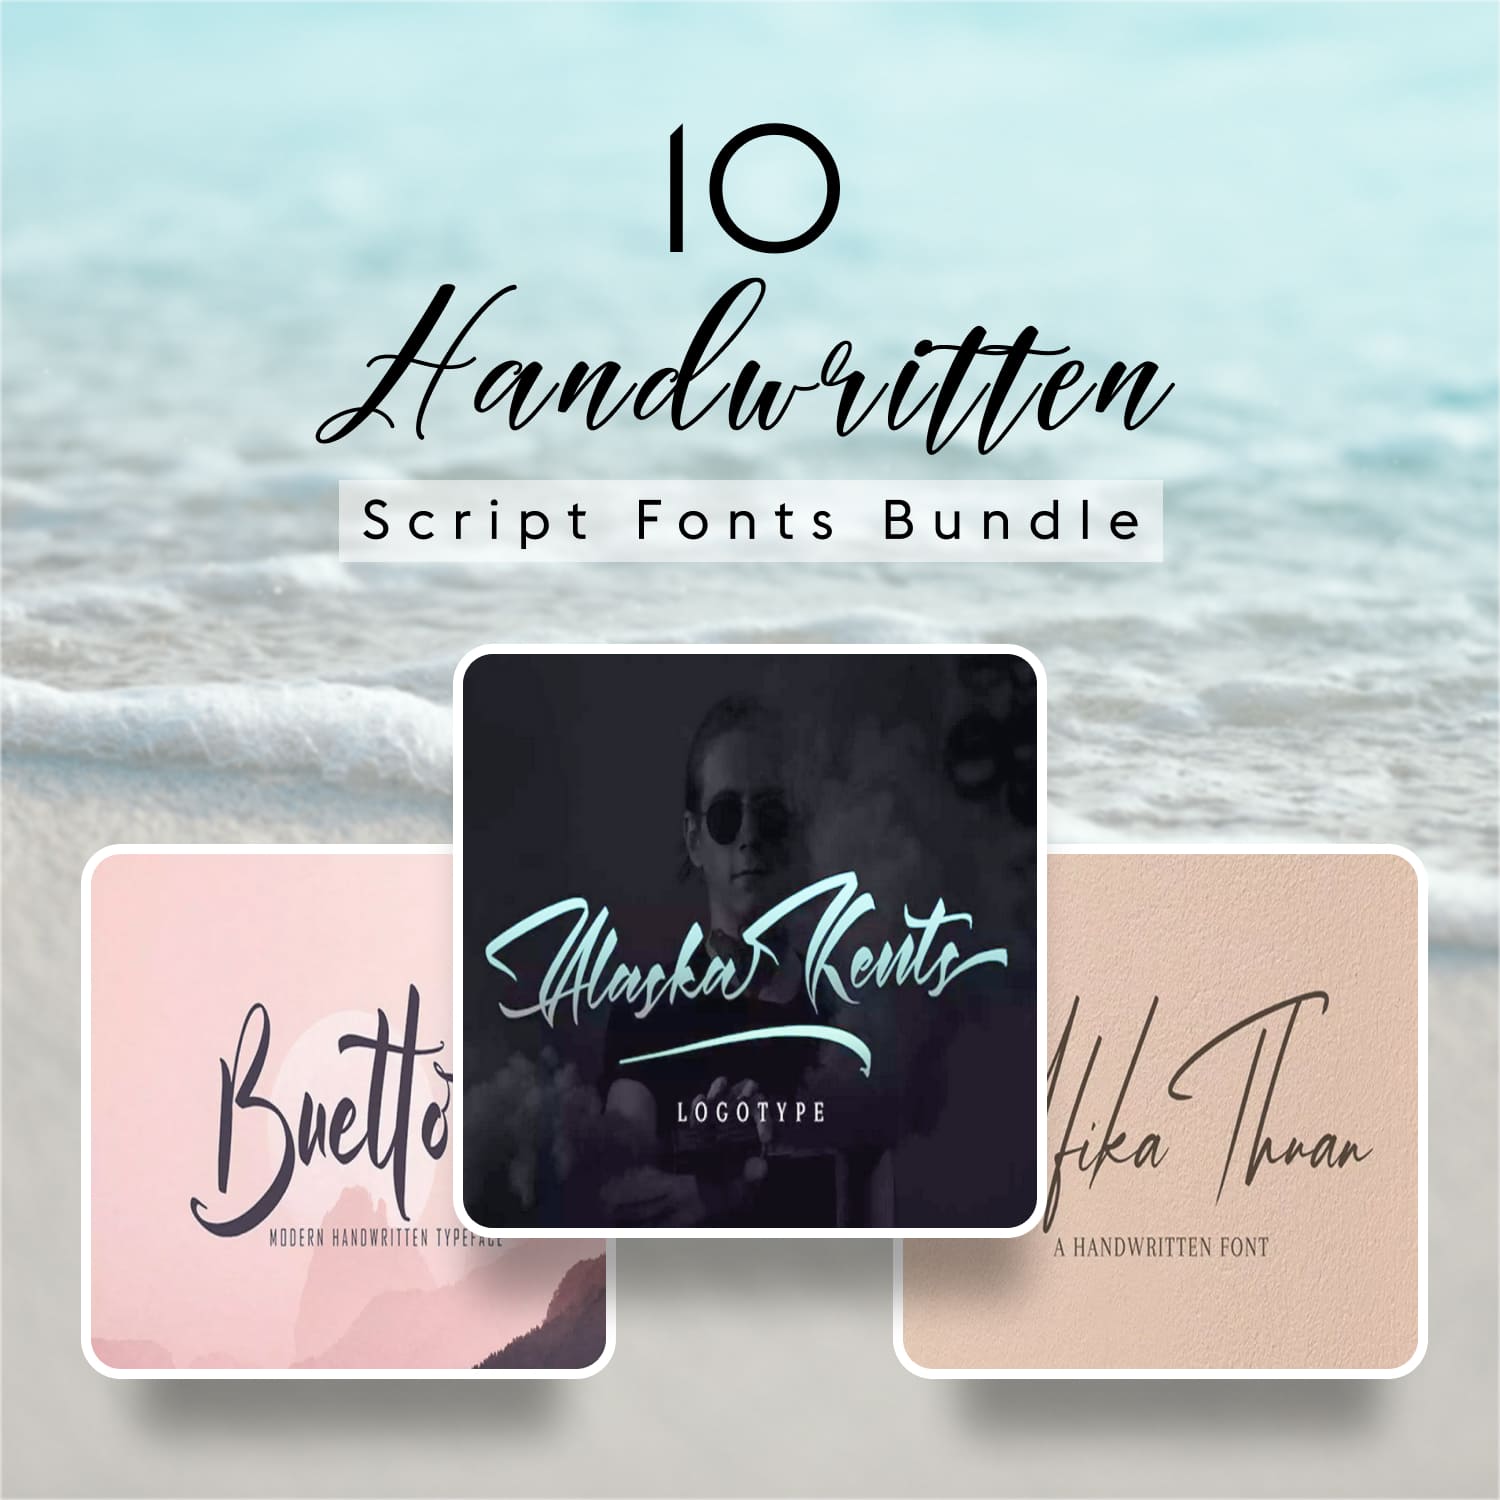 10 handwritten script fonts bundle.